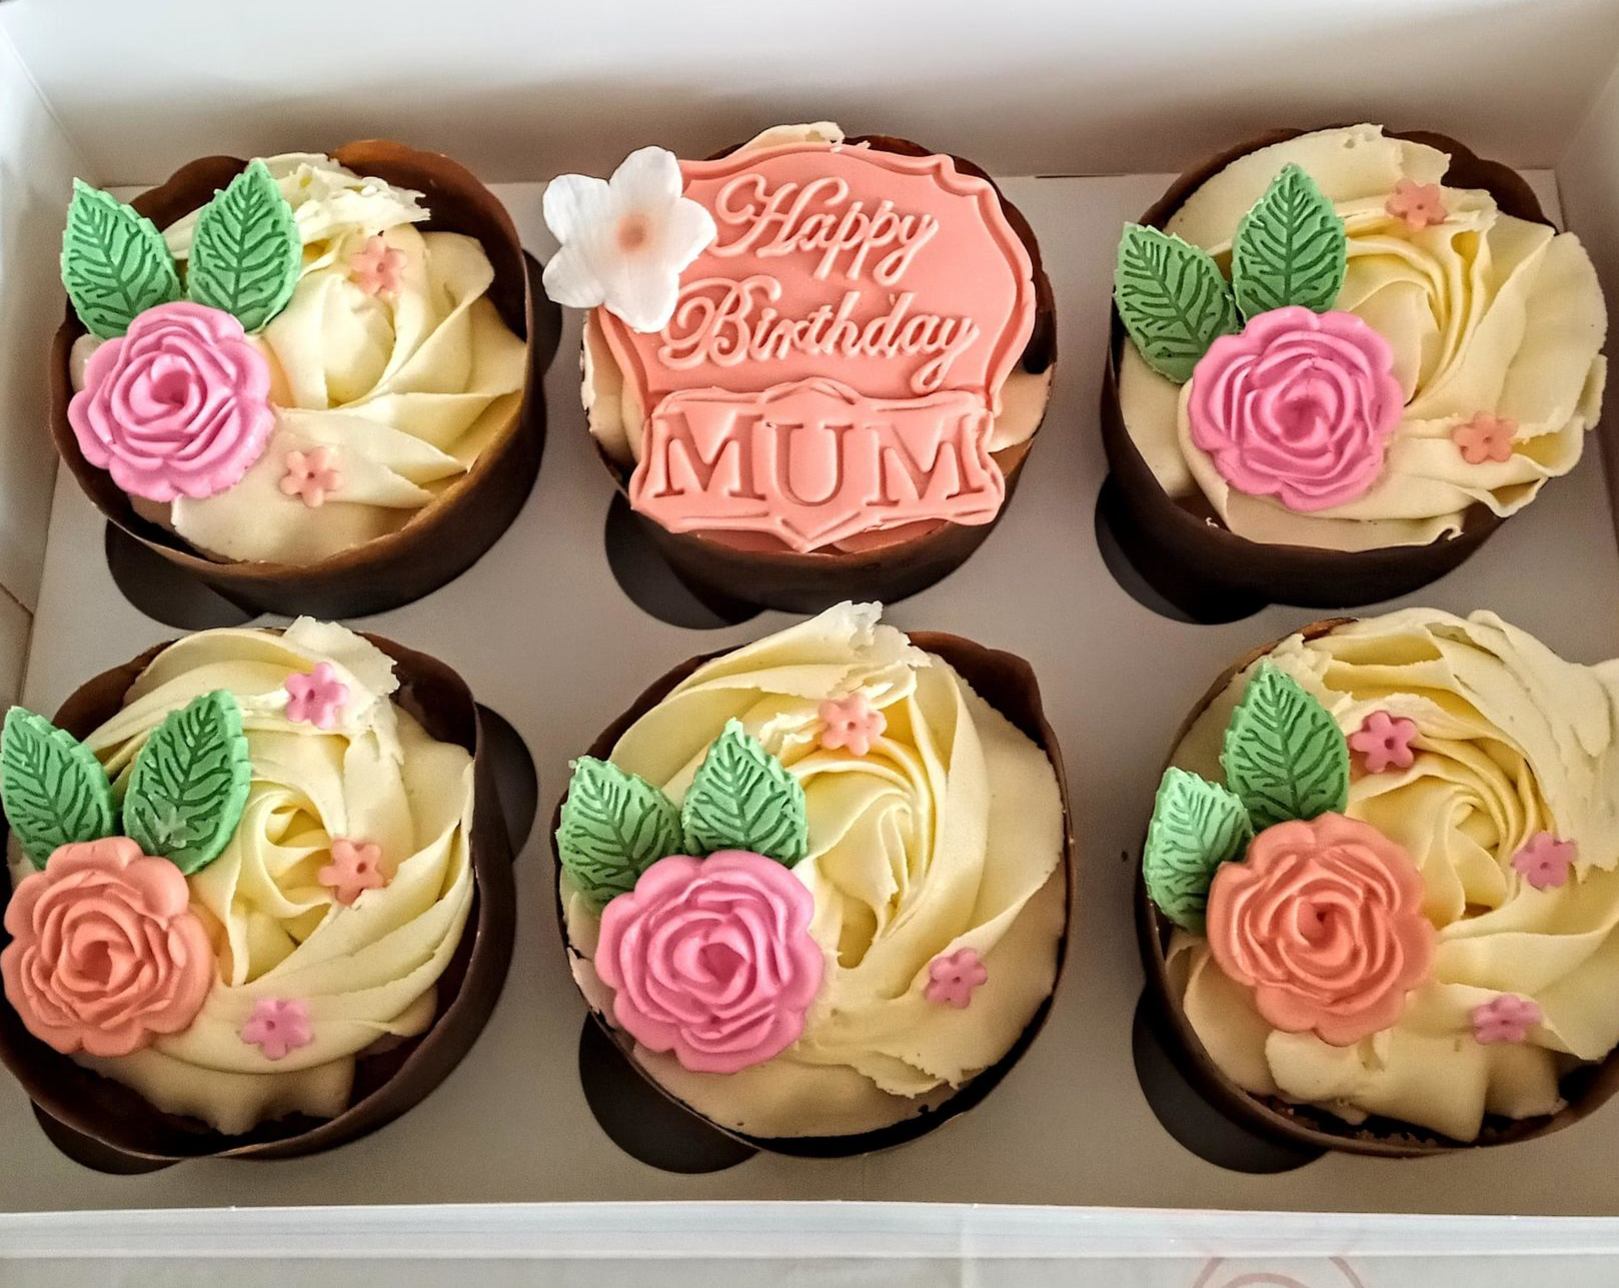 Happy birthday mum, floral cupcakes